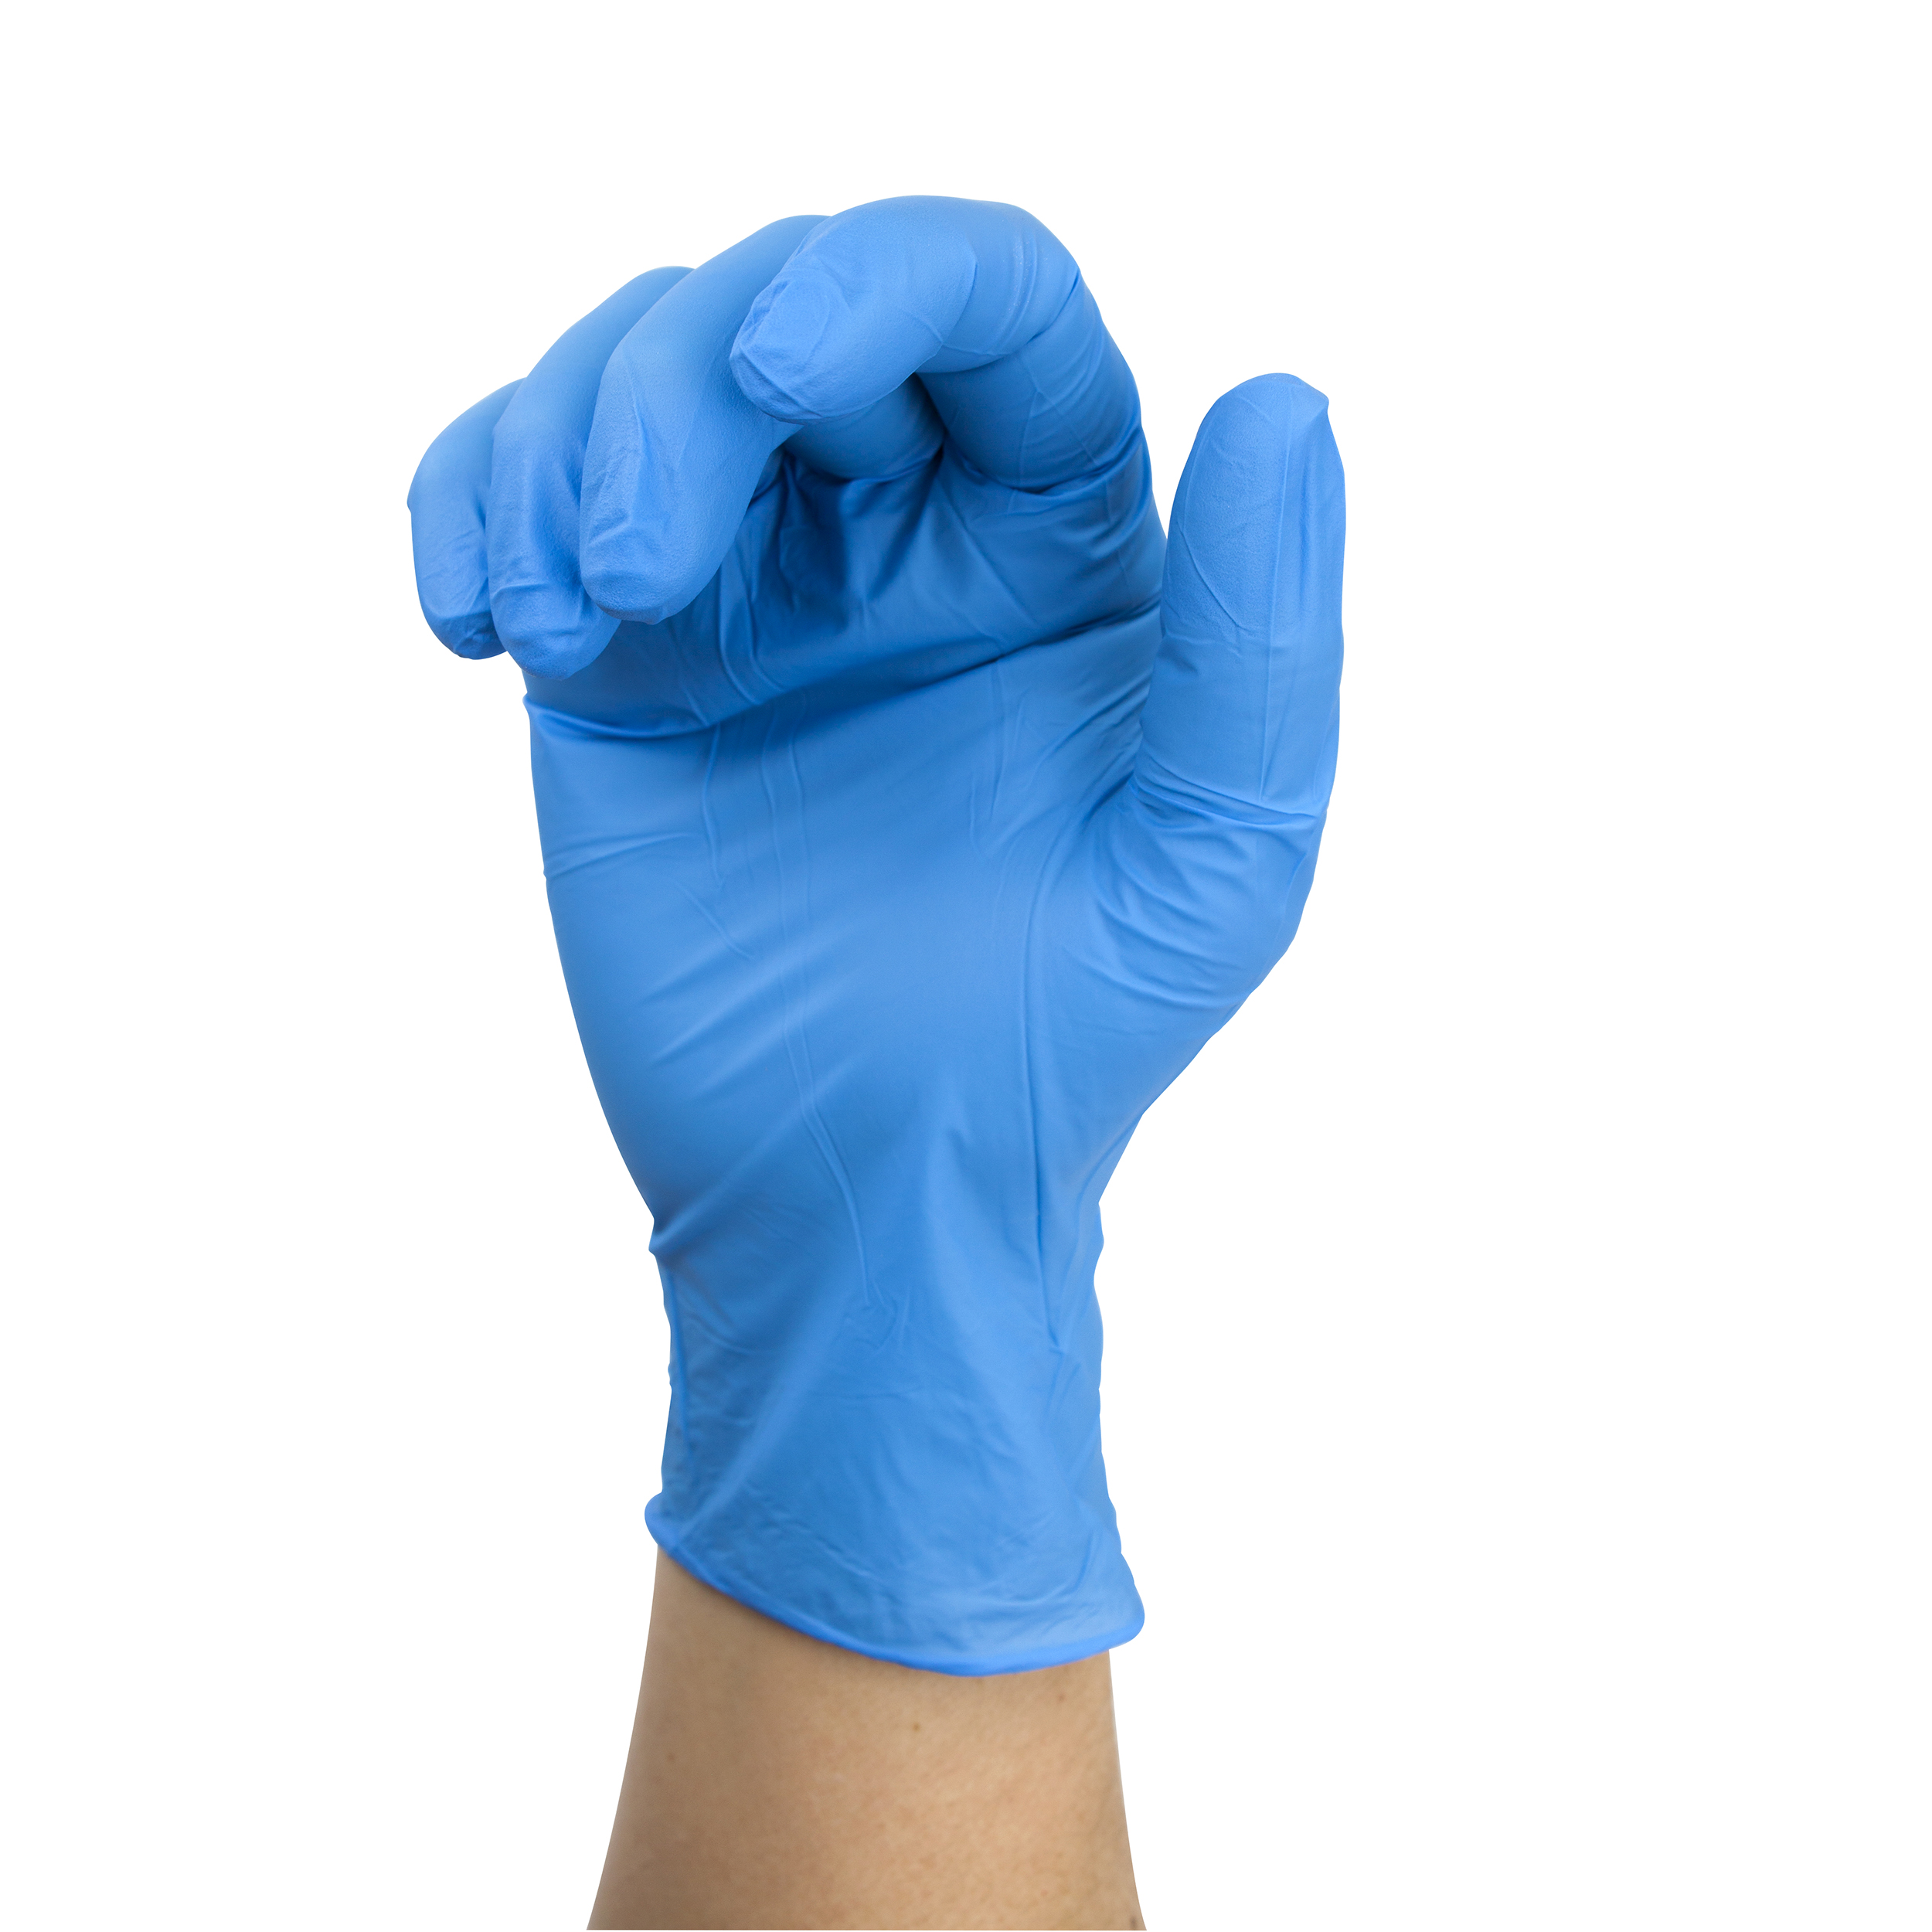 Nitrile Exam Glove (Non-latex) Powder Free - L - Blue - Box of 100